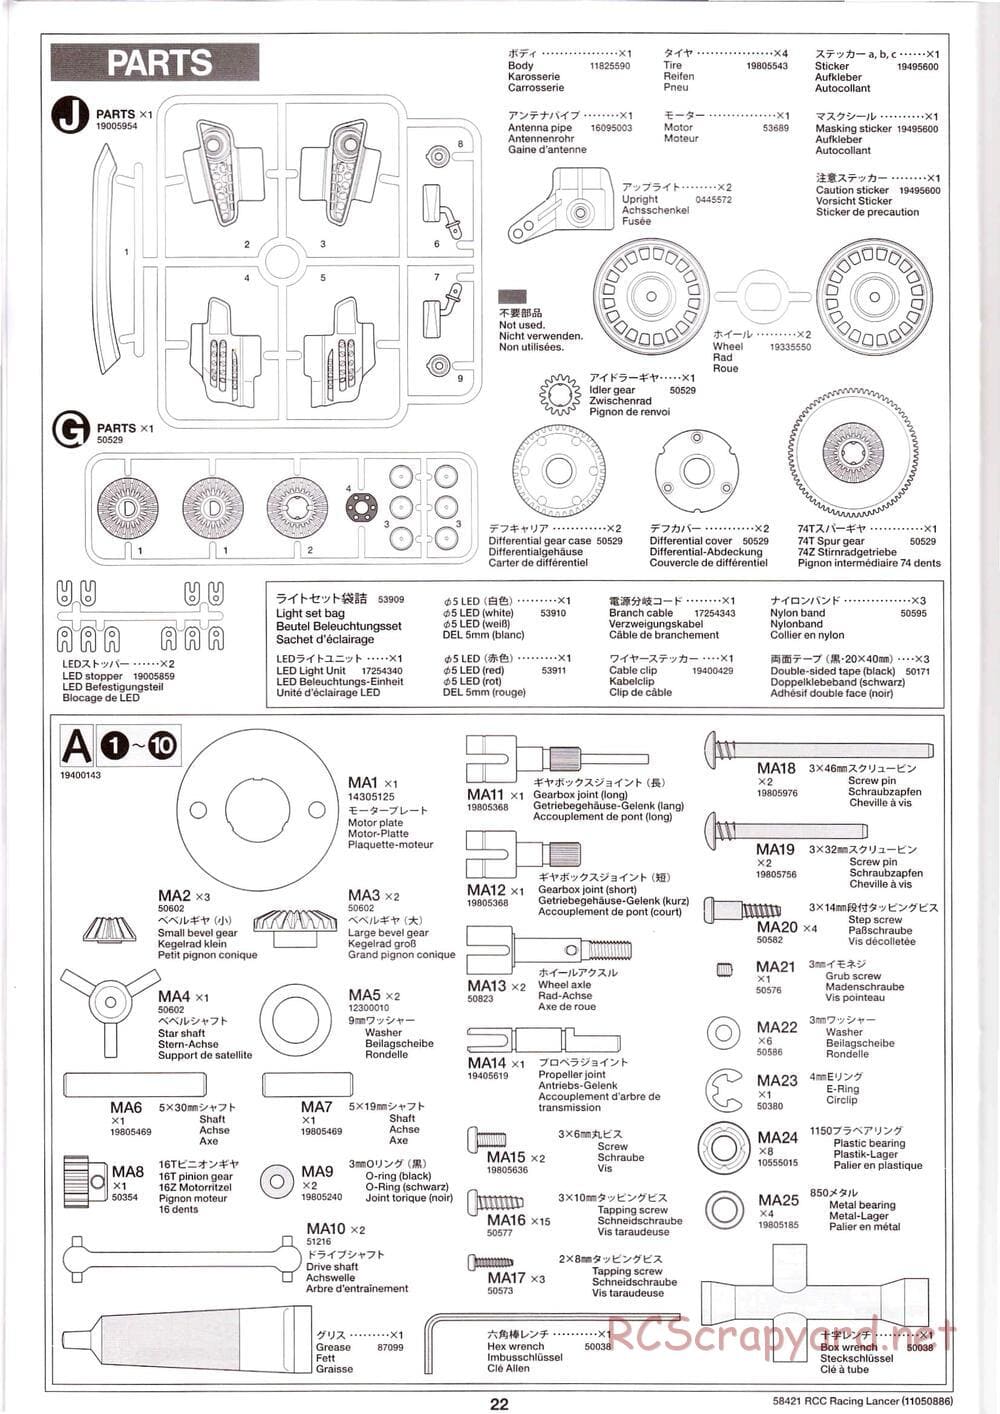 Tamiya - Mitsubishi Racing Lancer - DF-01 Chassis - Manual - Page 22